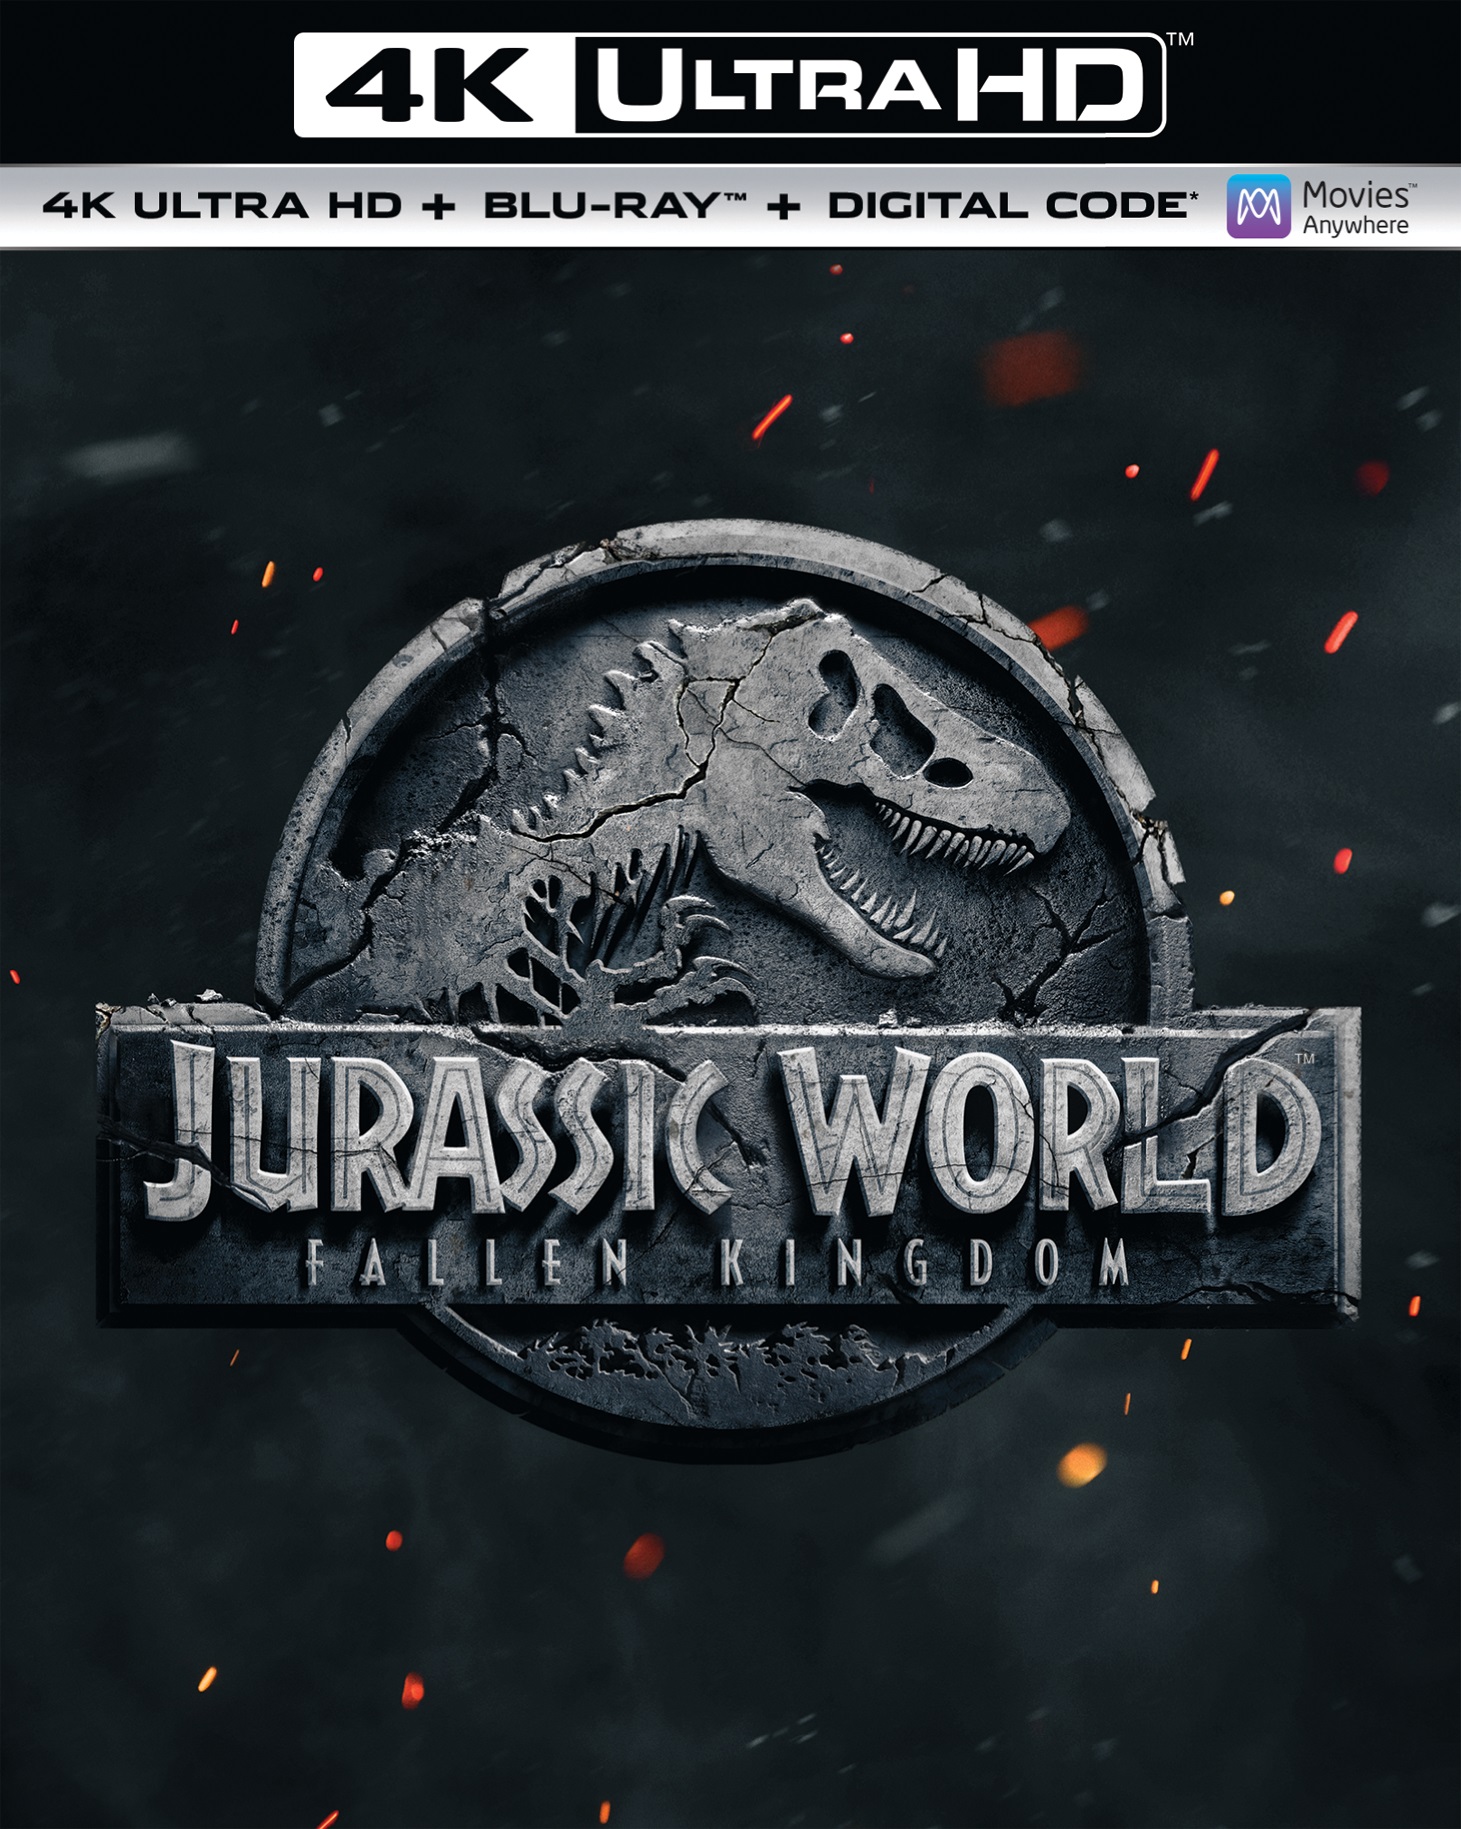 Jurassic World - Fallen Kingdom (4K Ultra HD + Blu-ray + Digital Download) - UHD [ 2018 ]  - Action Movies On 4K Ultra HD Blu-ray - Movies On GRUV